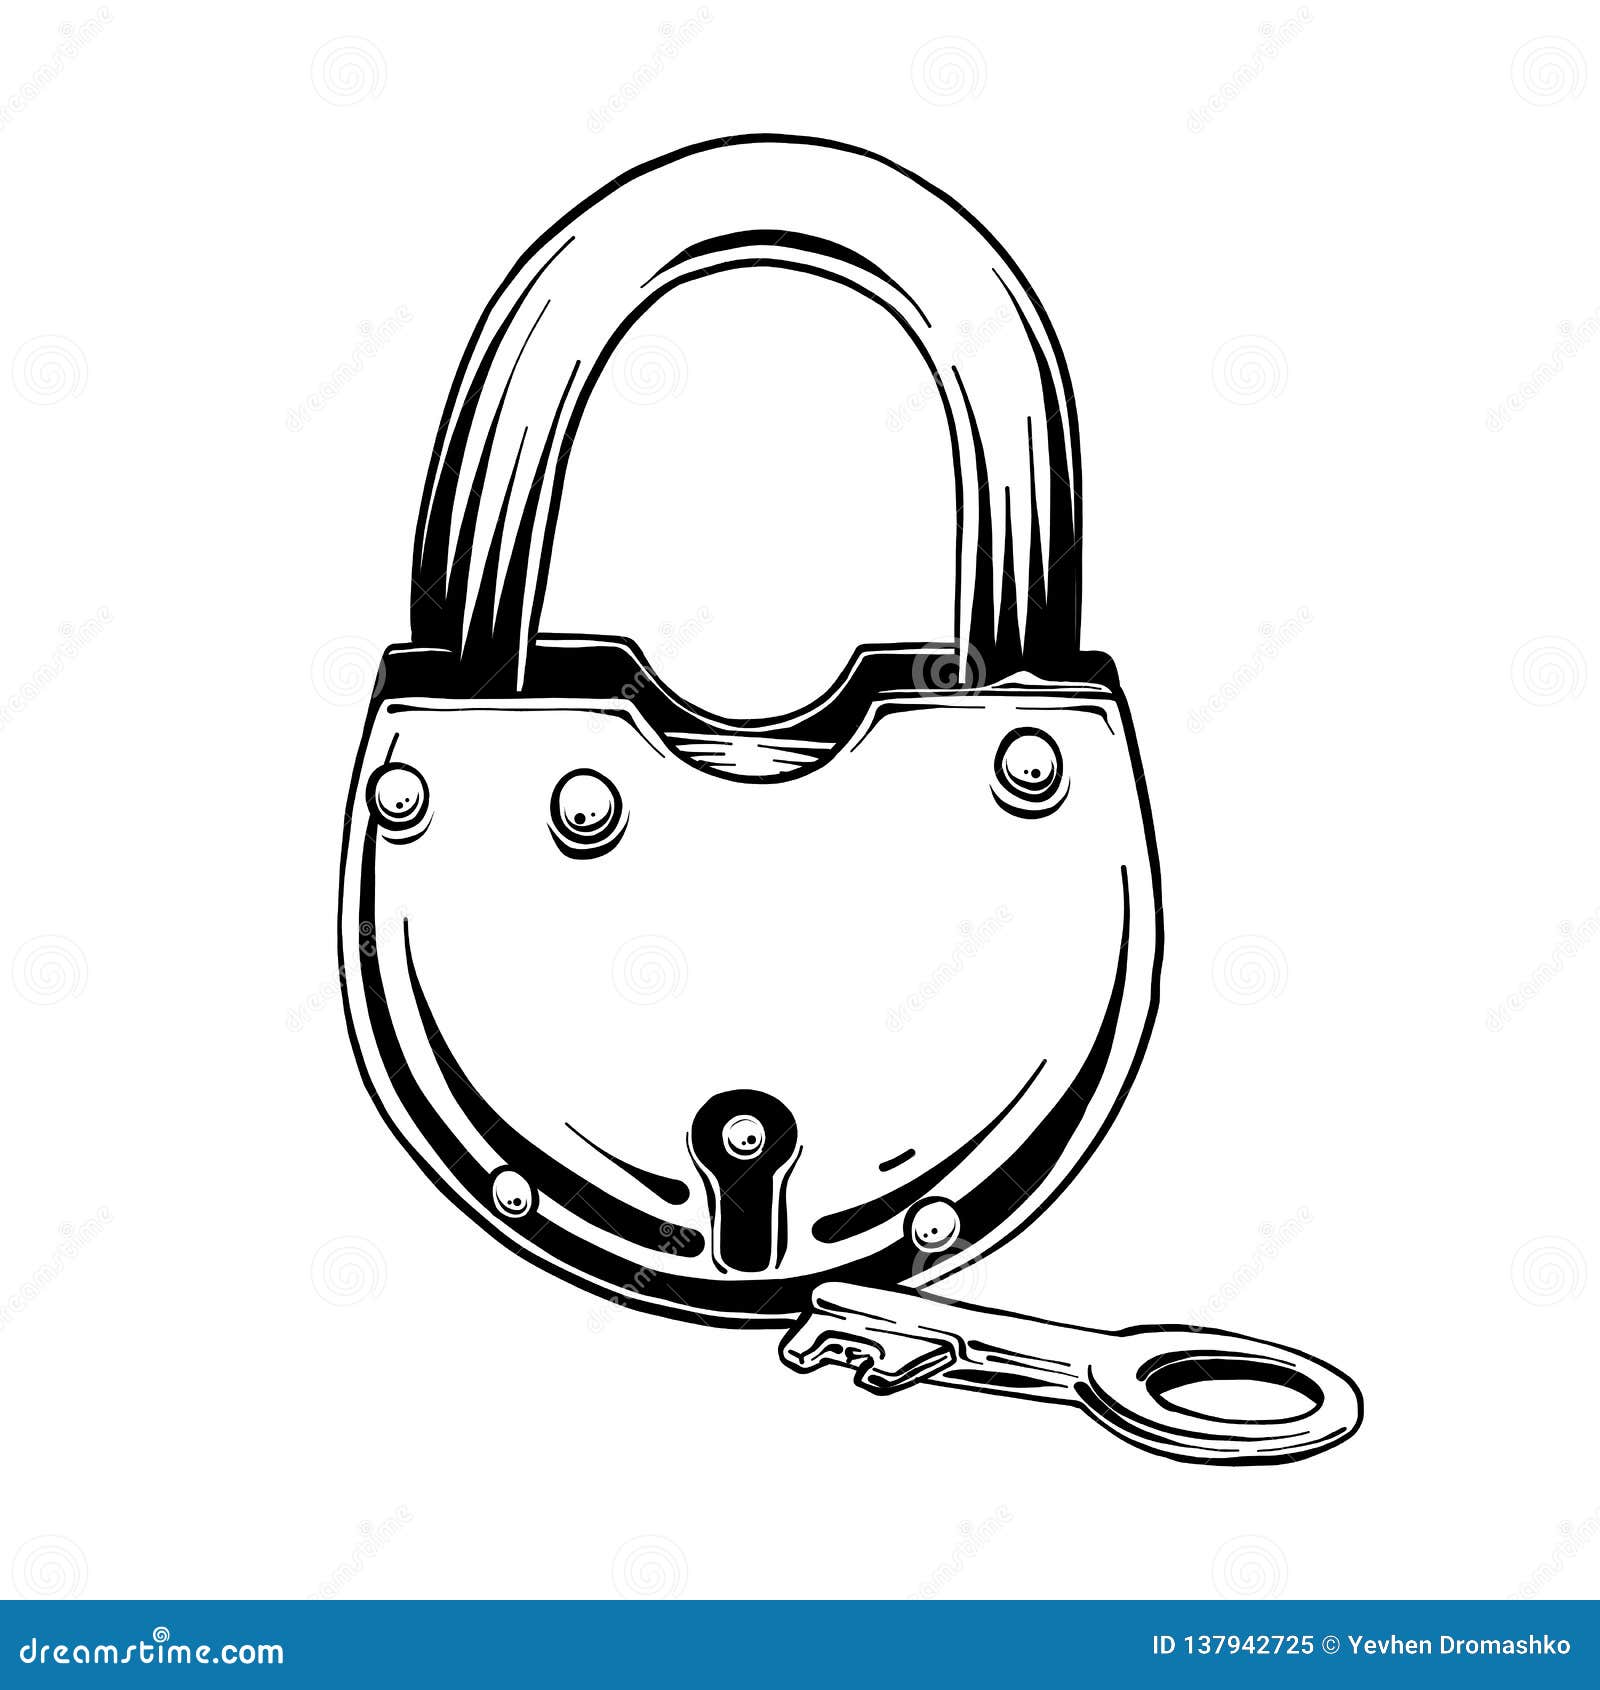 Hand-drawn lock and key illustration